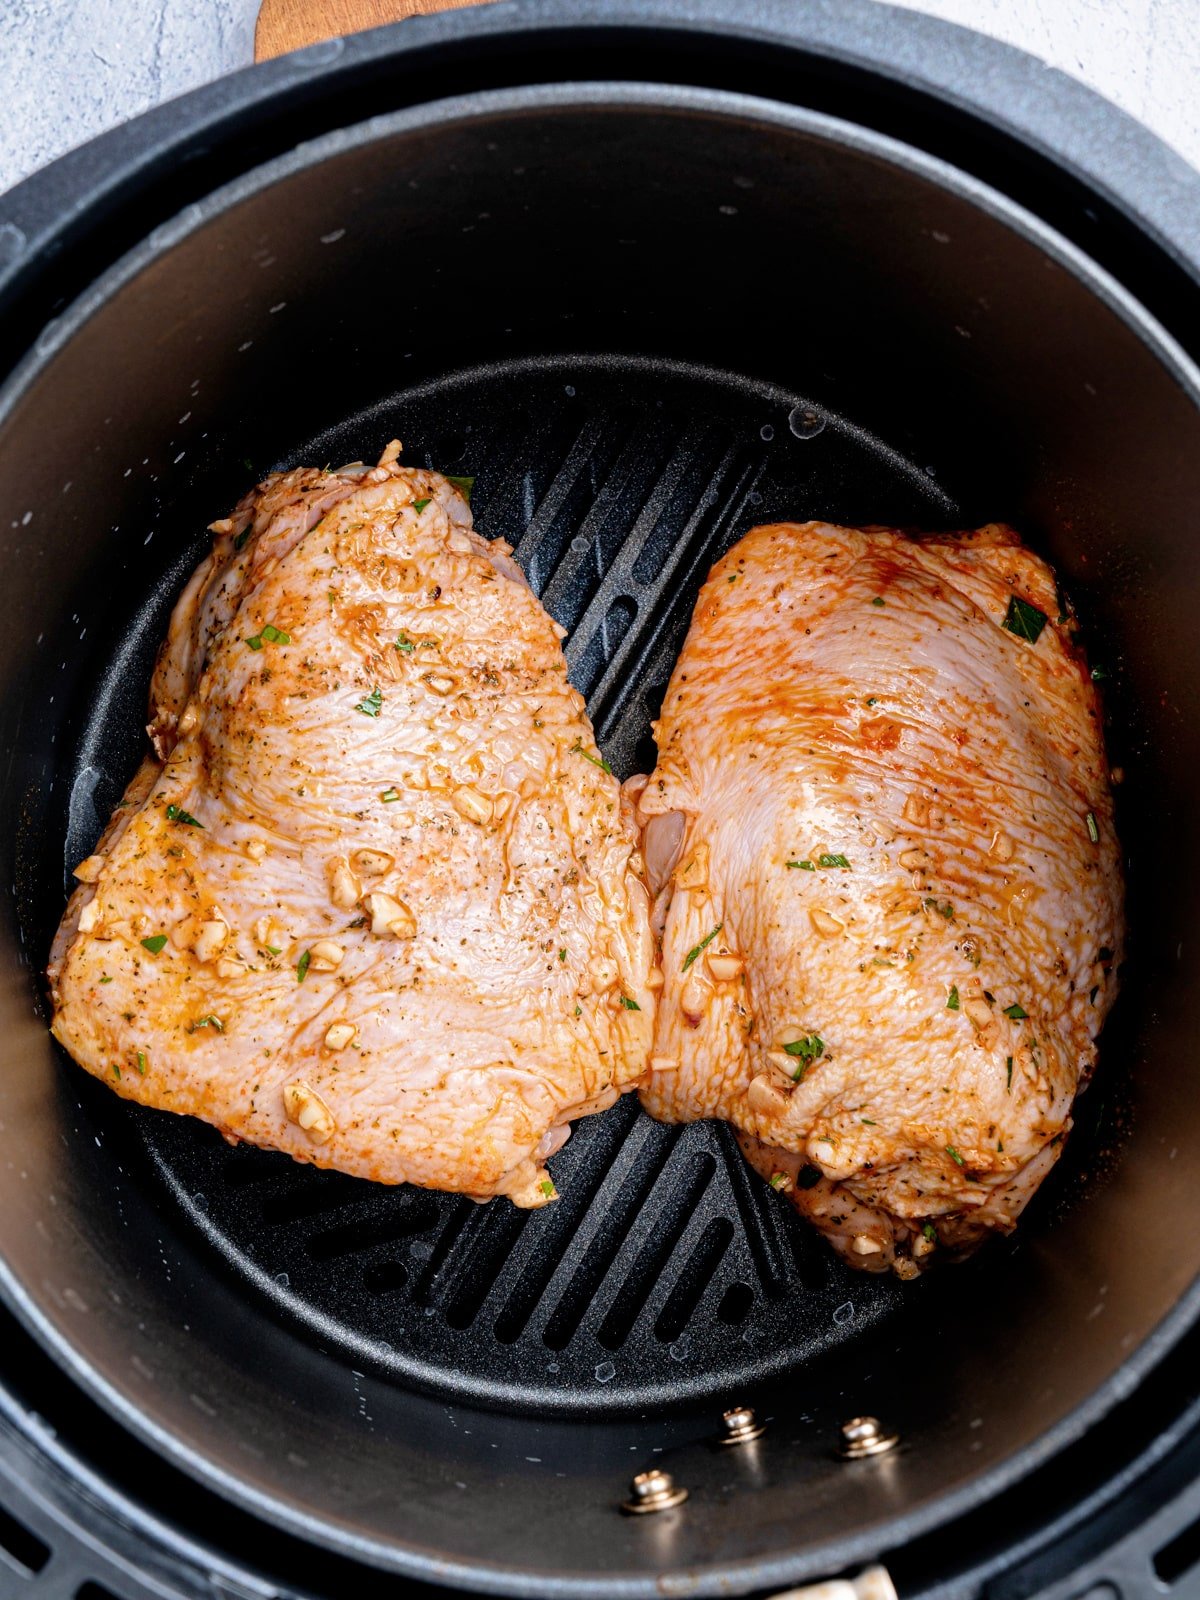 Uncooked Chicken Thighs in air fryer basket